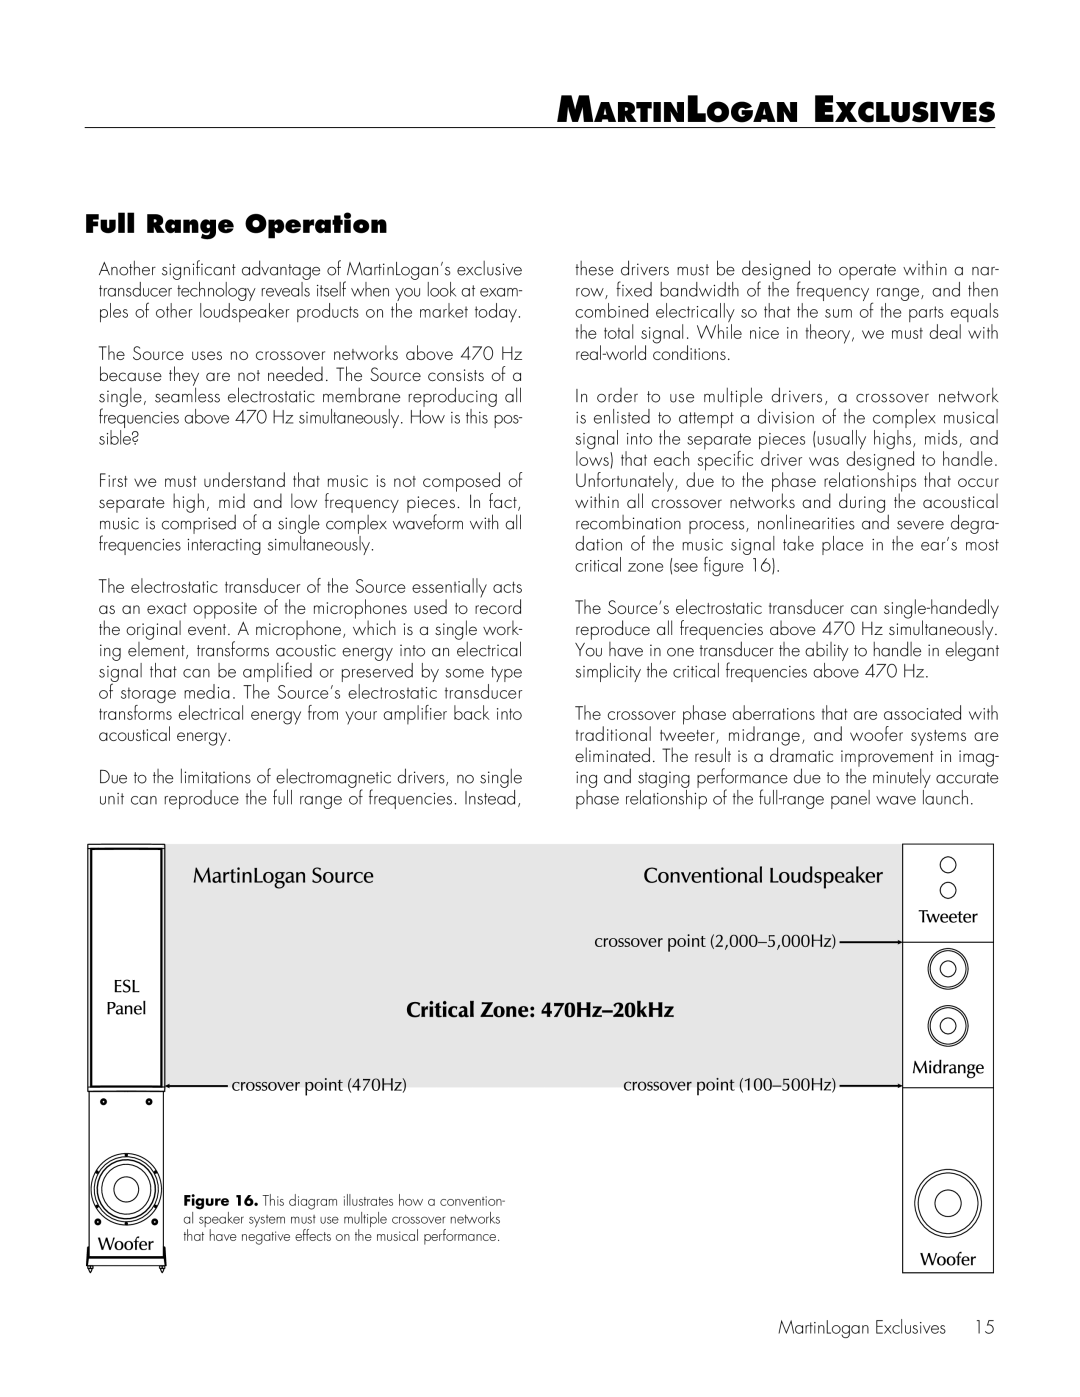 MartinLogan Source Speakers user manual Martinlogan Exclusives, Full Range Operation 